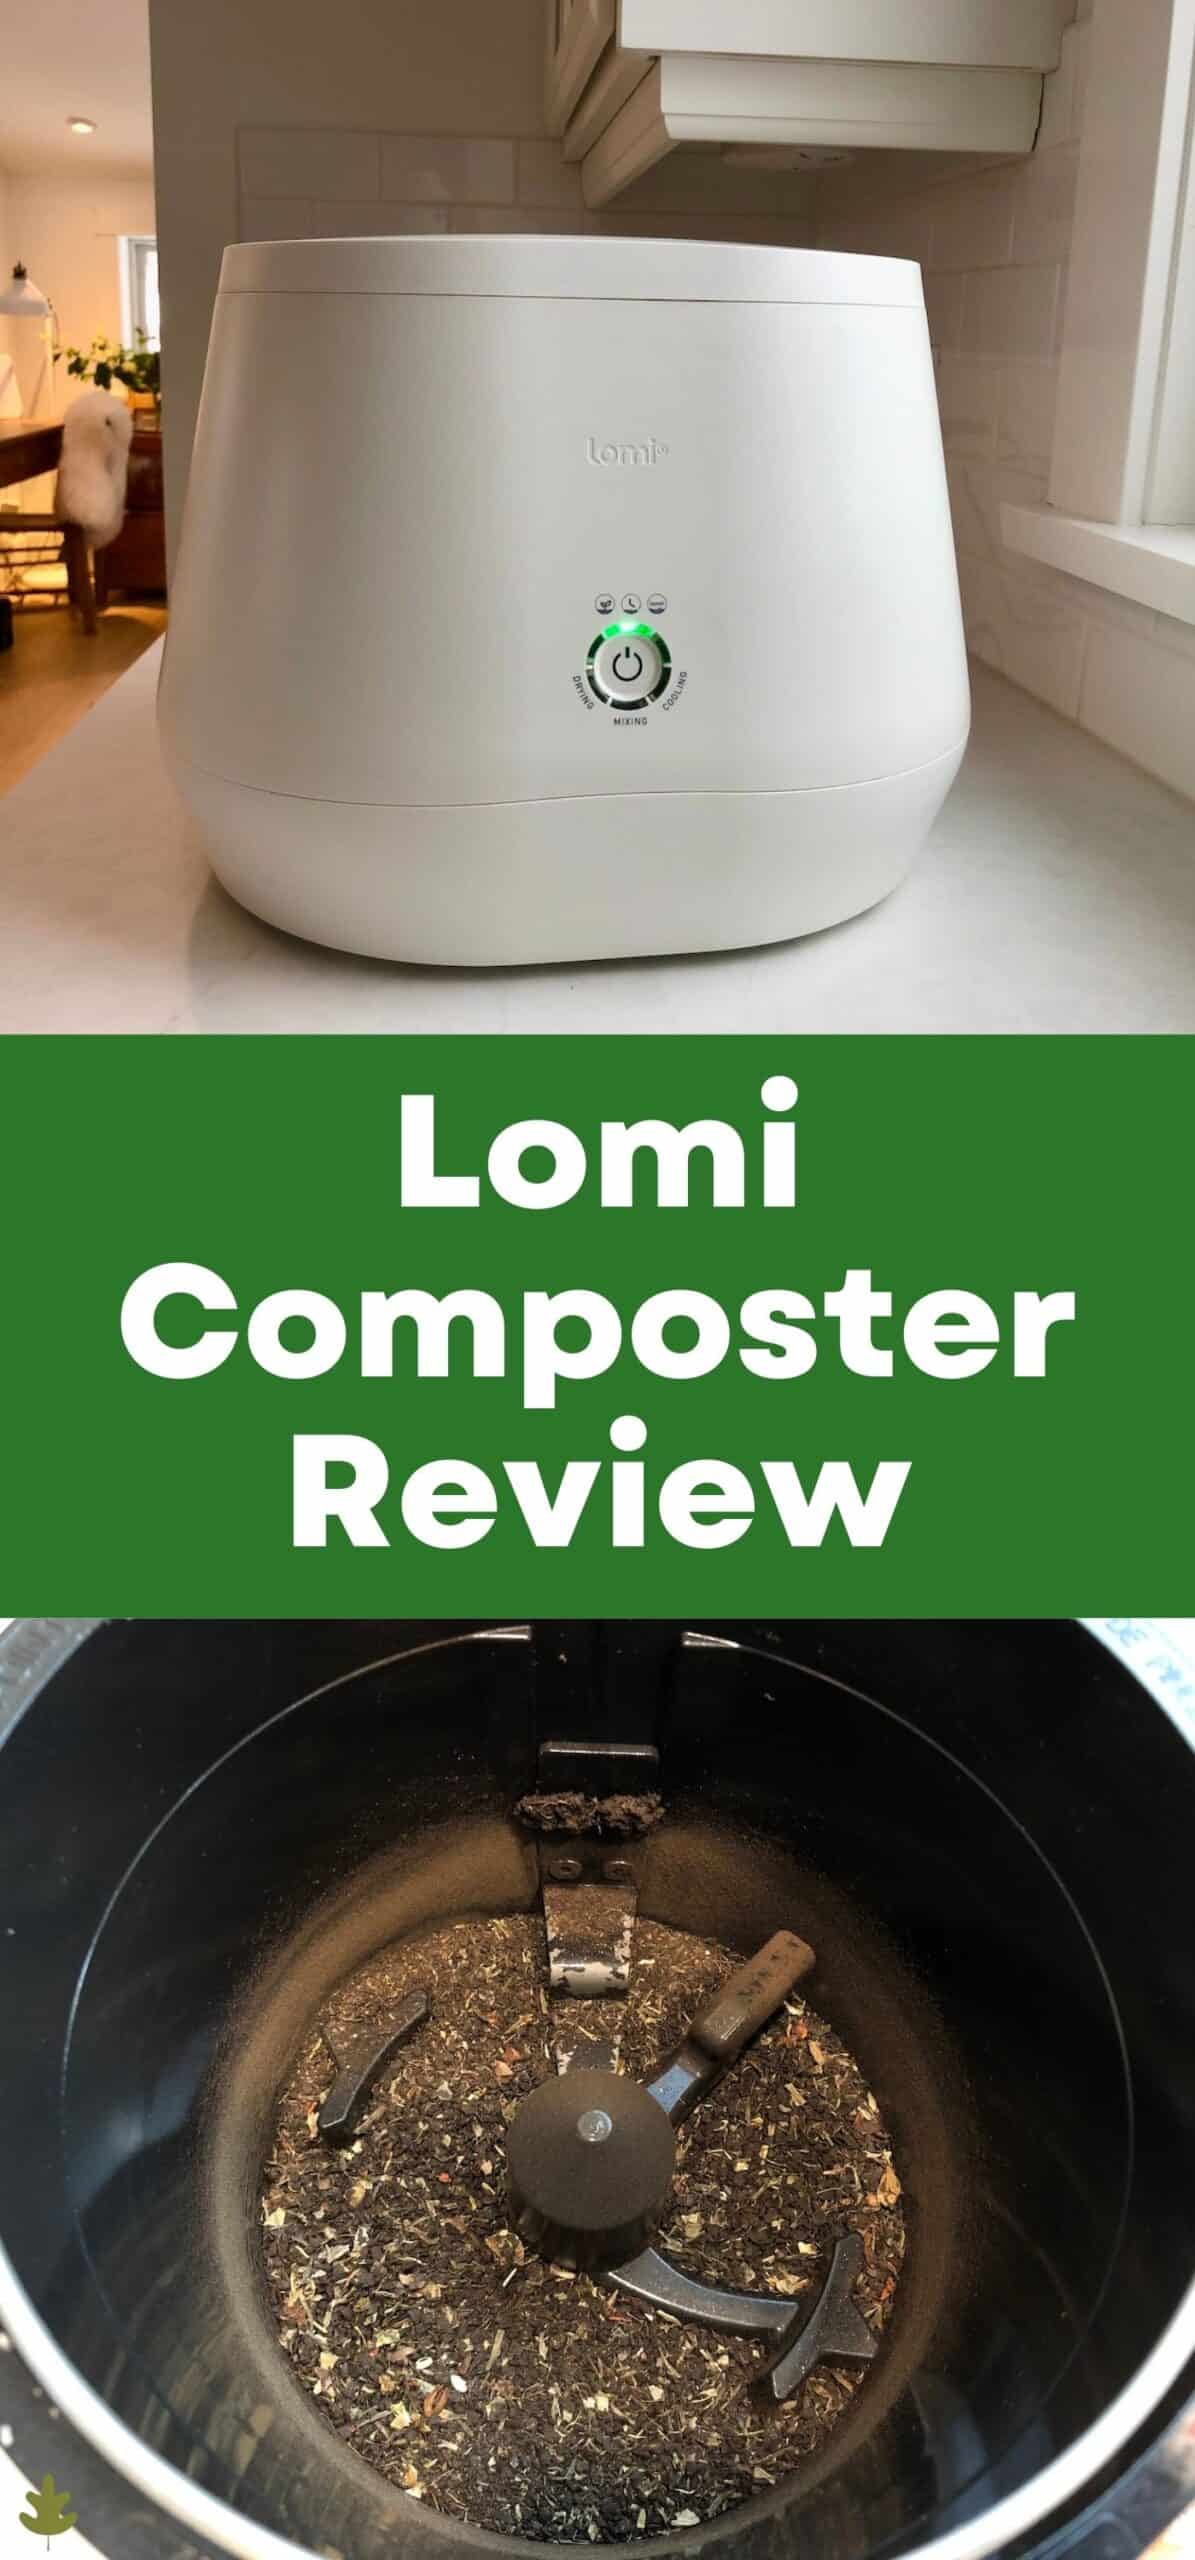 Lomi composter review via @home4theharvest